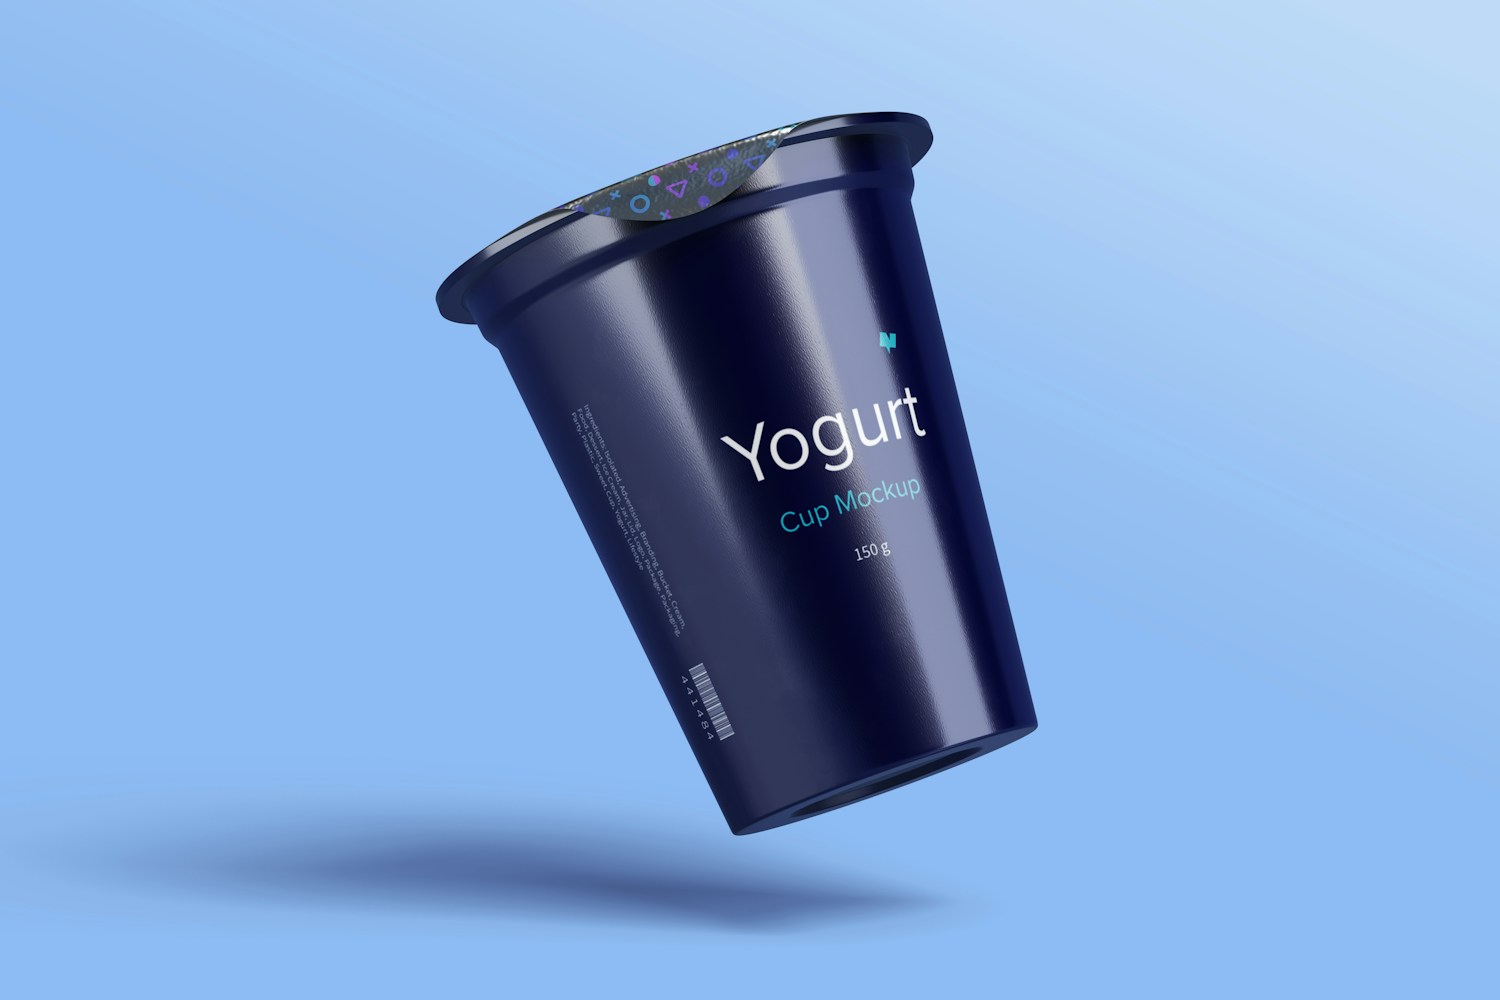 150 g Yogurt Cup Mockup, Floating